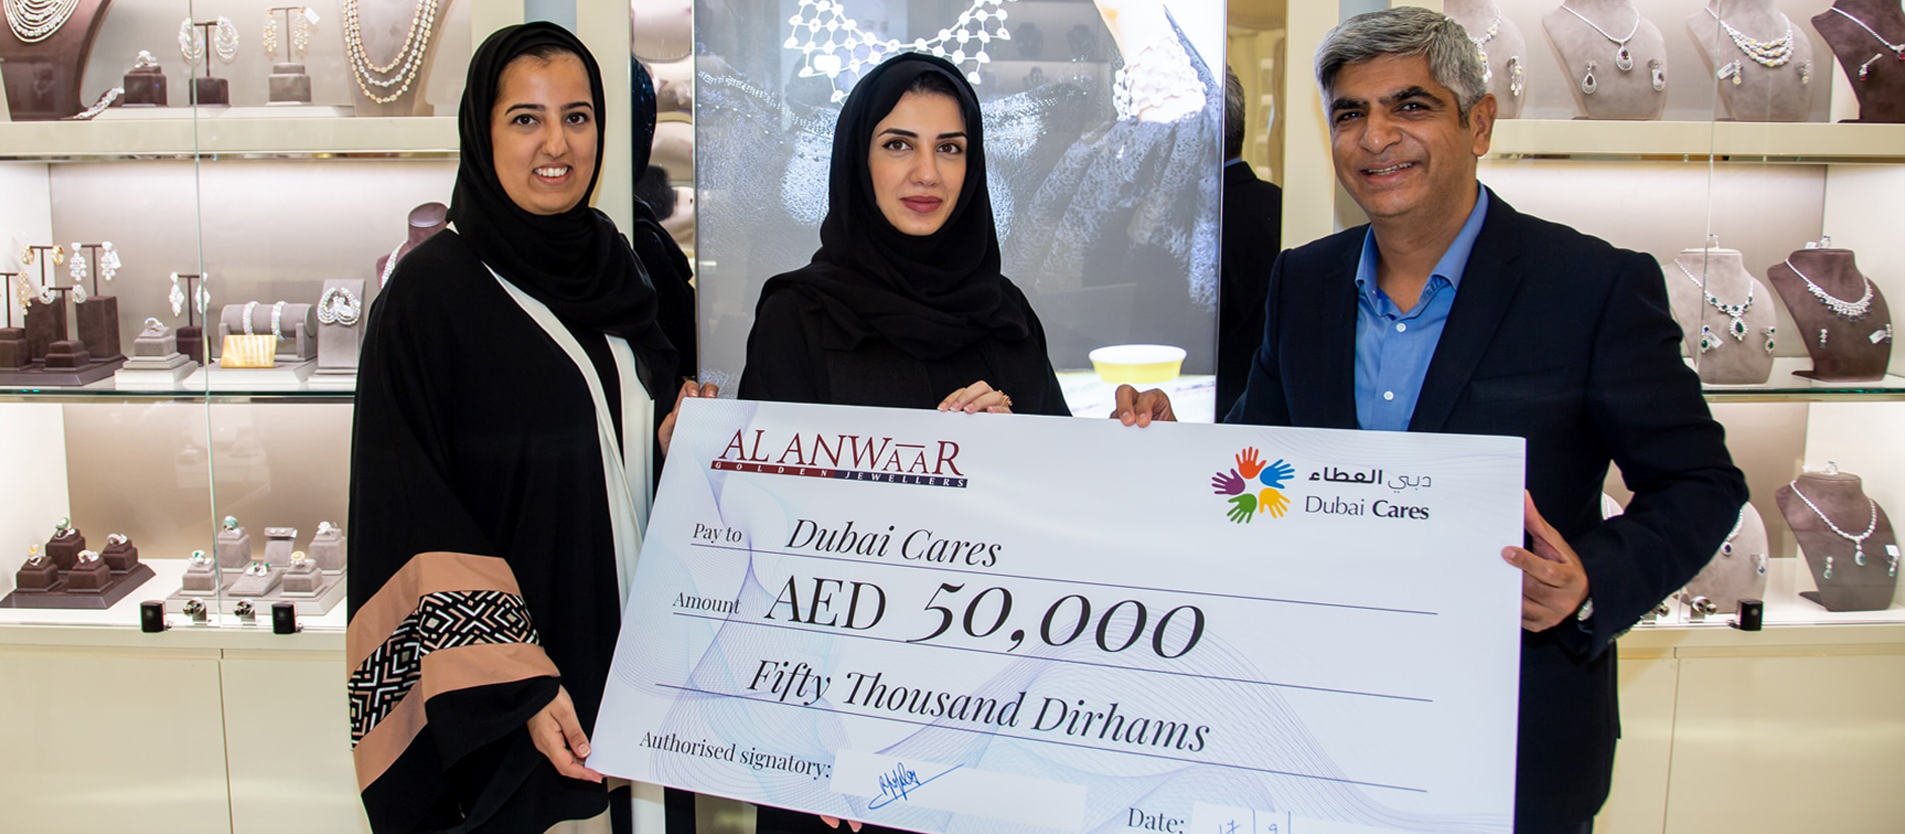 Al Anwaar_Dubai Jeweller_Dubai Cares